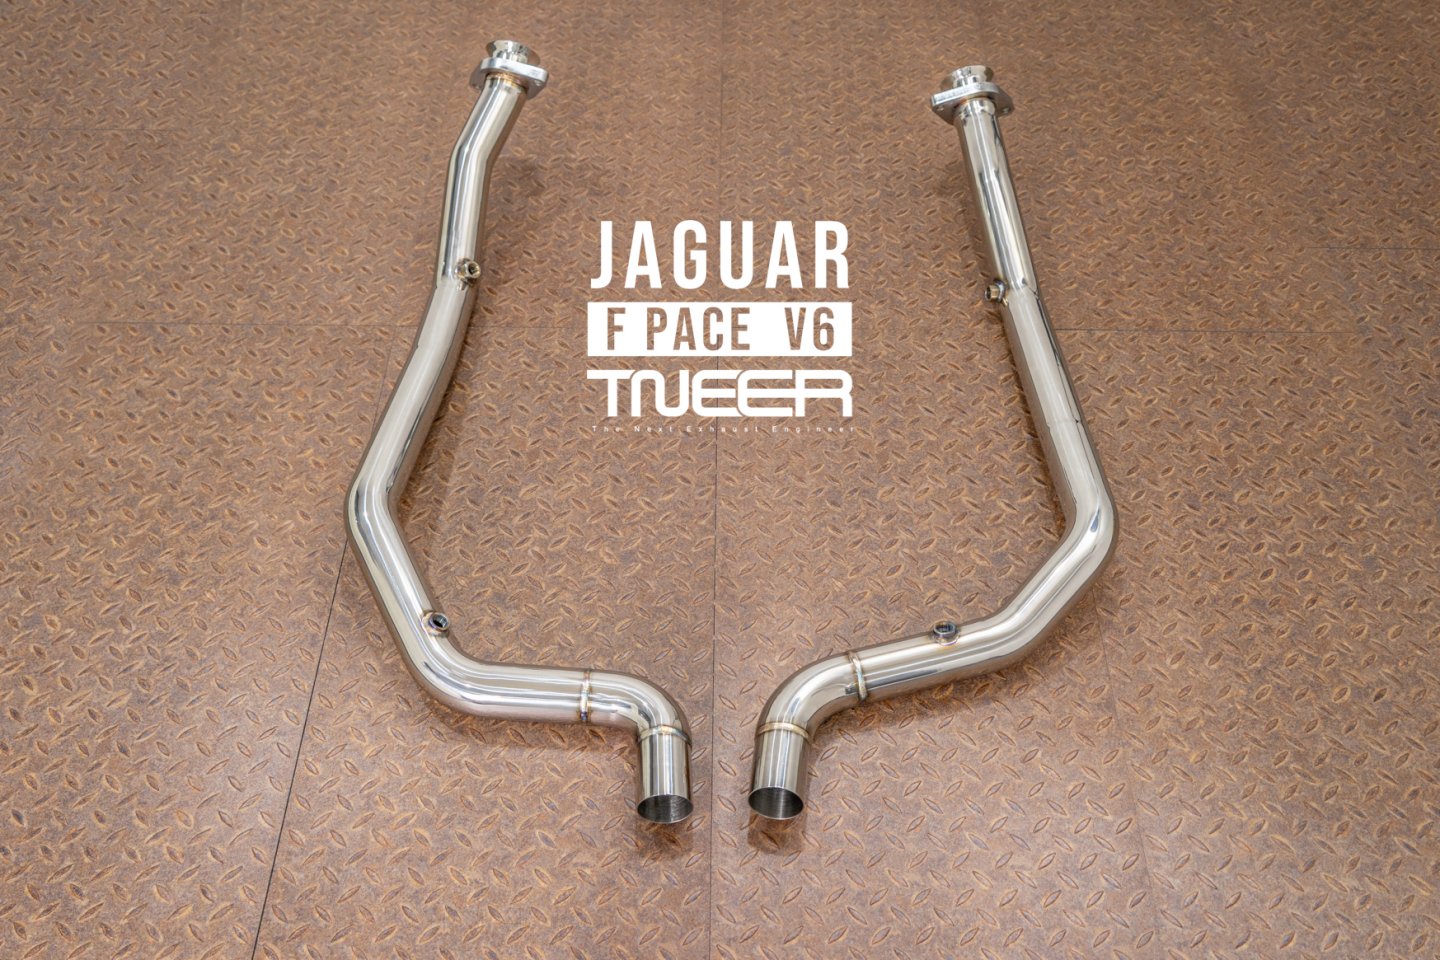 Jaguar F-Pace V6 3.0 TNEER Performance Exhaust System